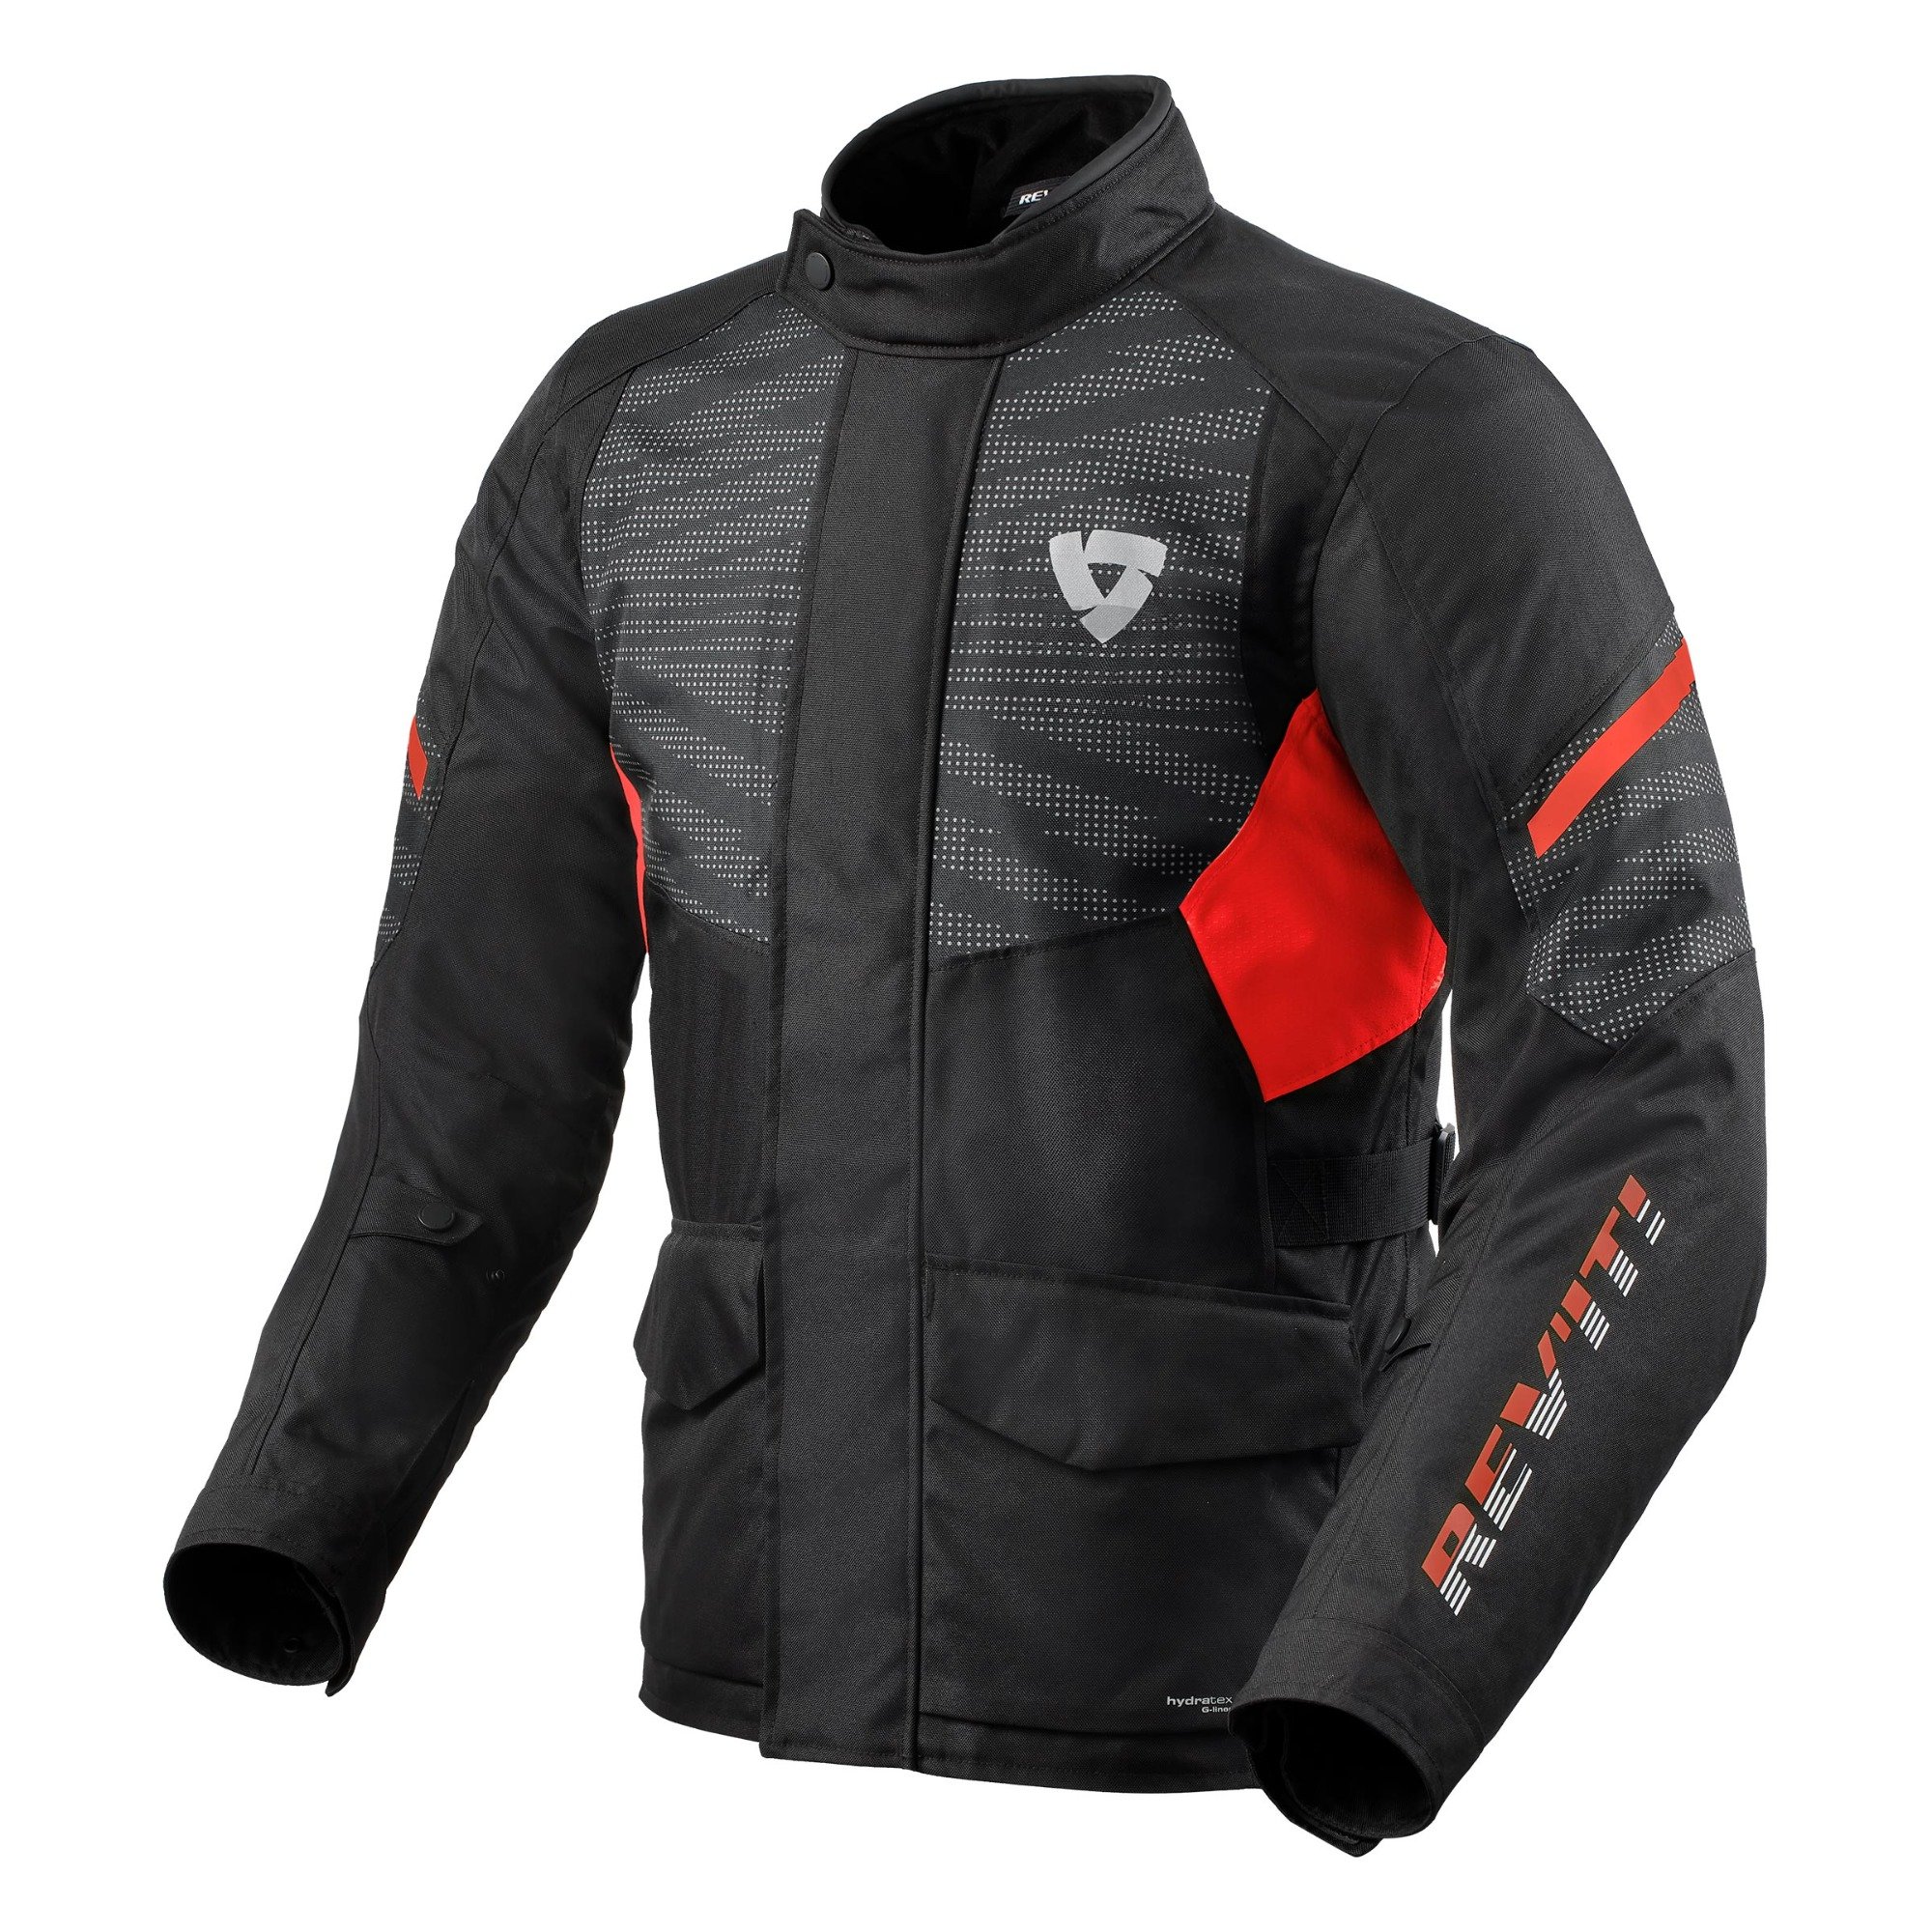 Image of REV'IT! Duke H2O Jacket Black Red Size 4XL ID 8700001332088